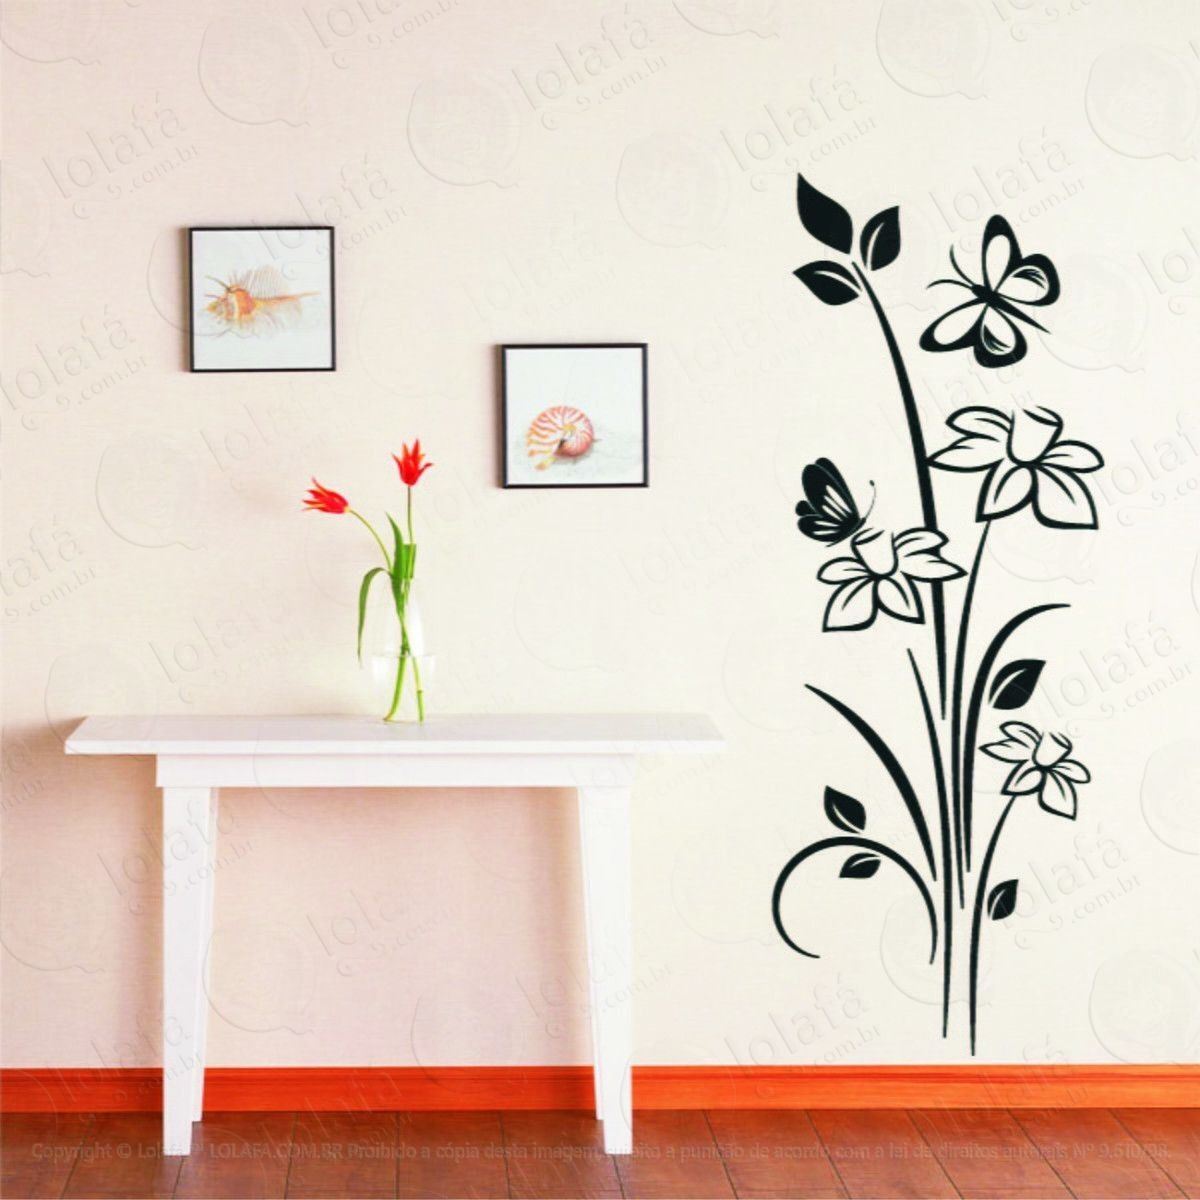 adesivo decorativo parede box banheiro floral flor borboleta mod:656